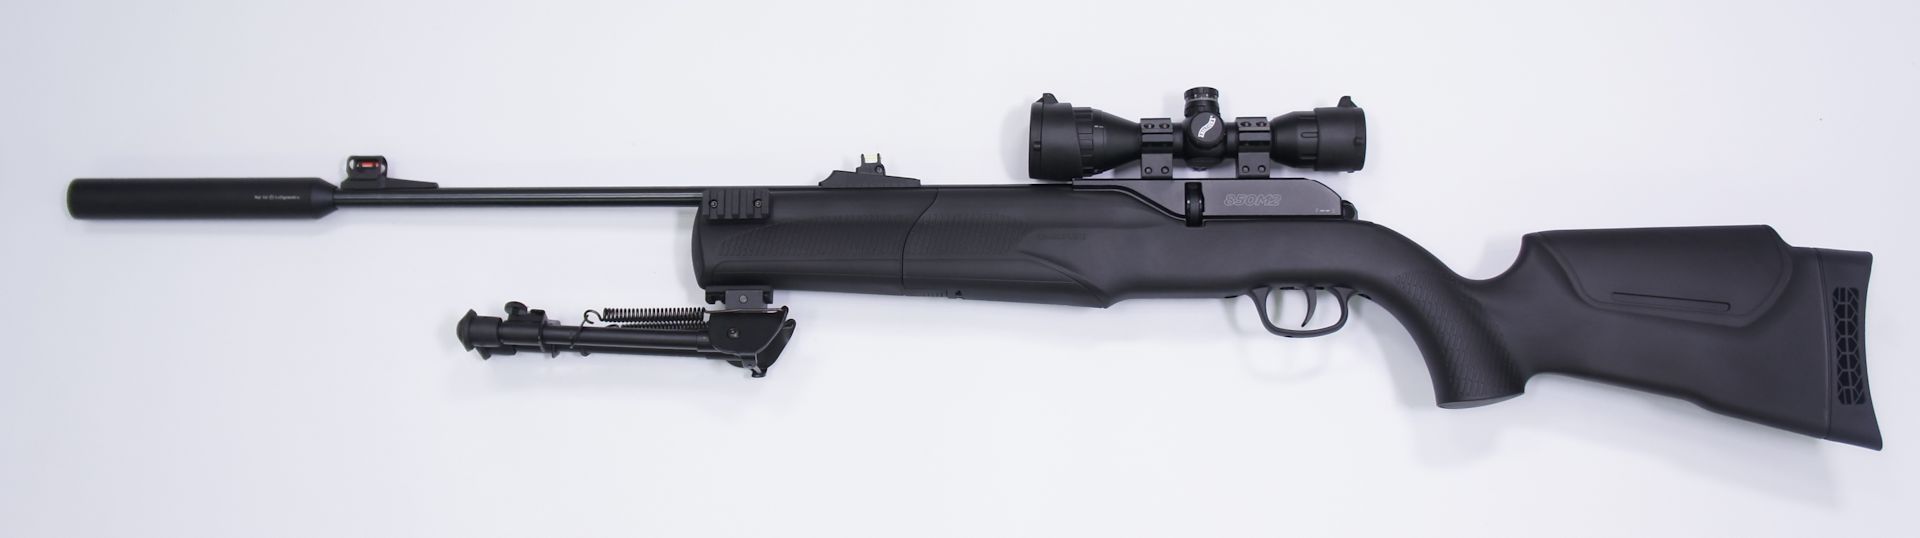 Umarex 850 M2 Spezial, Kal. 4,5mm